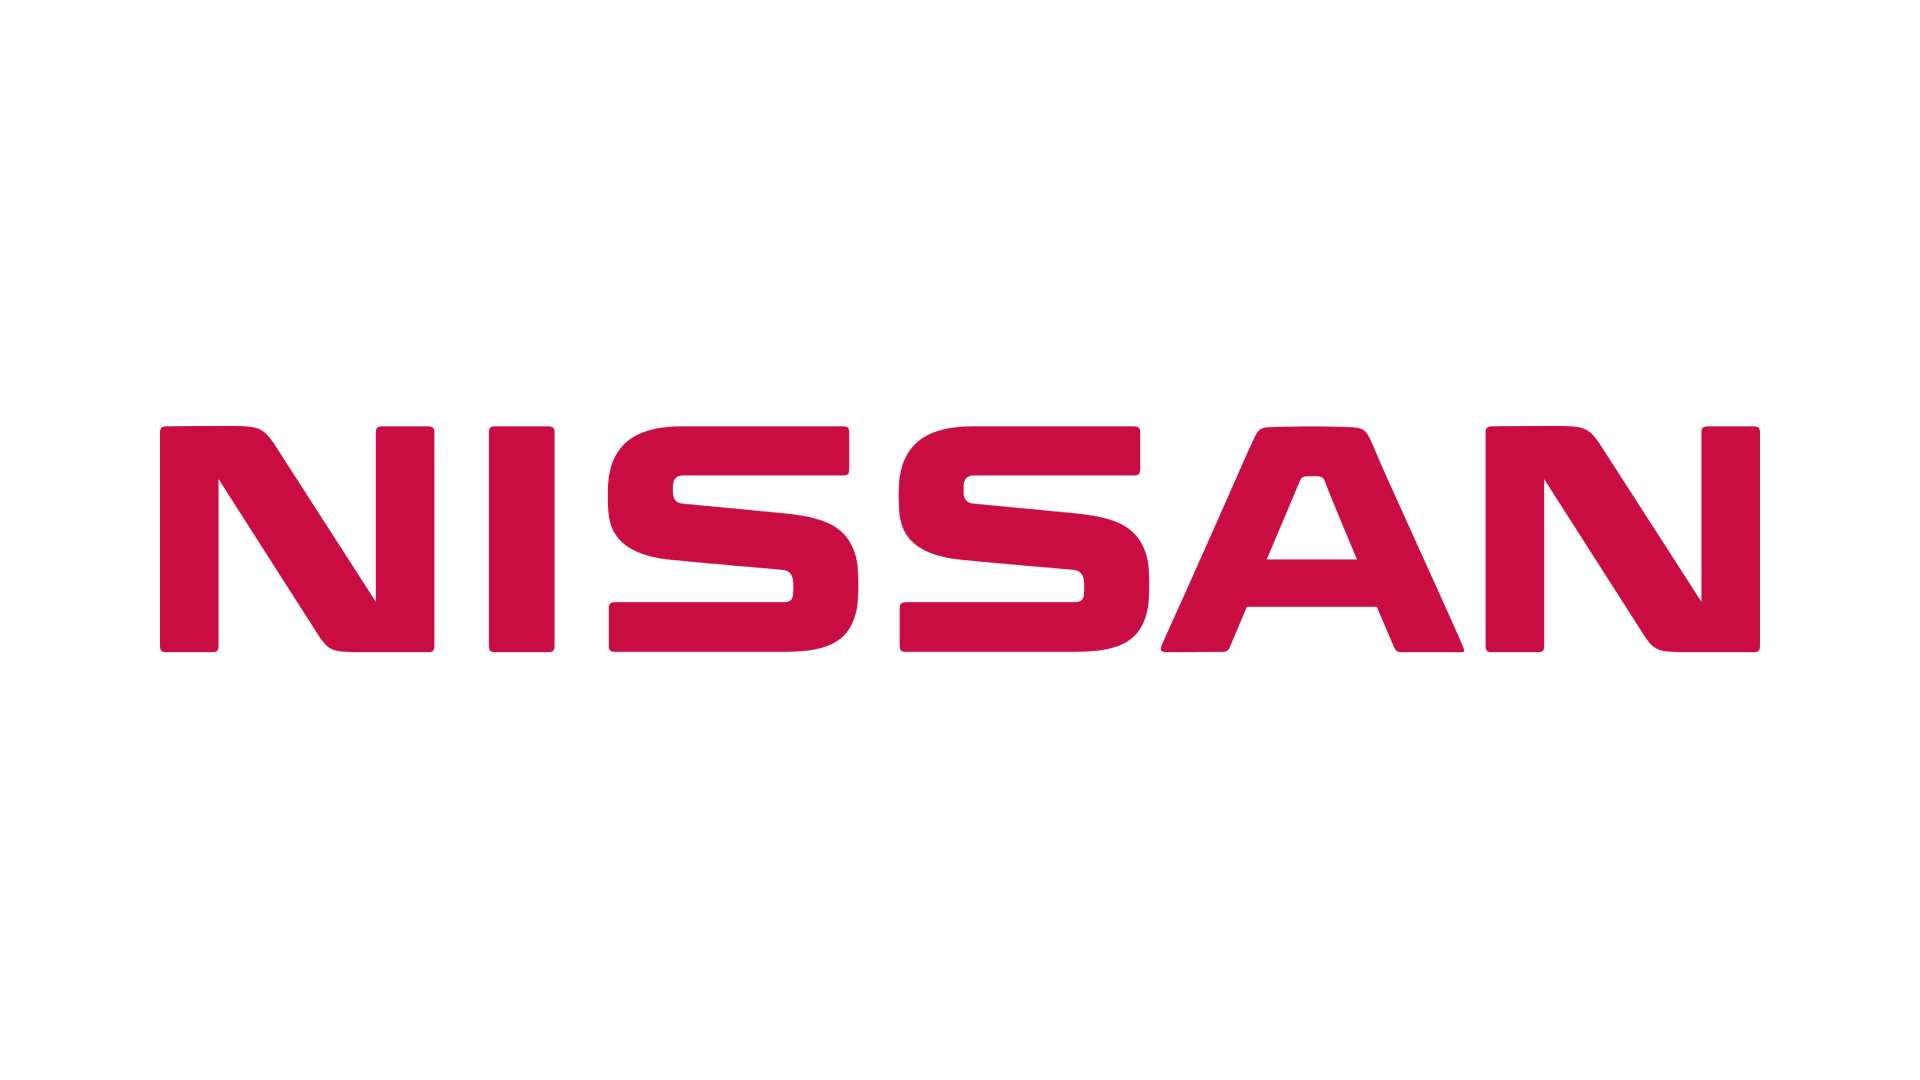 Nissan logo free vector